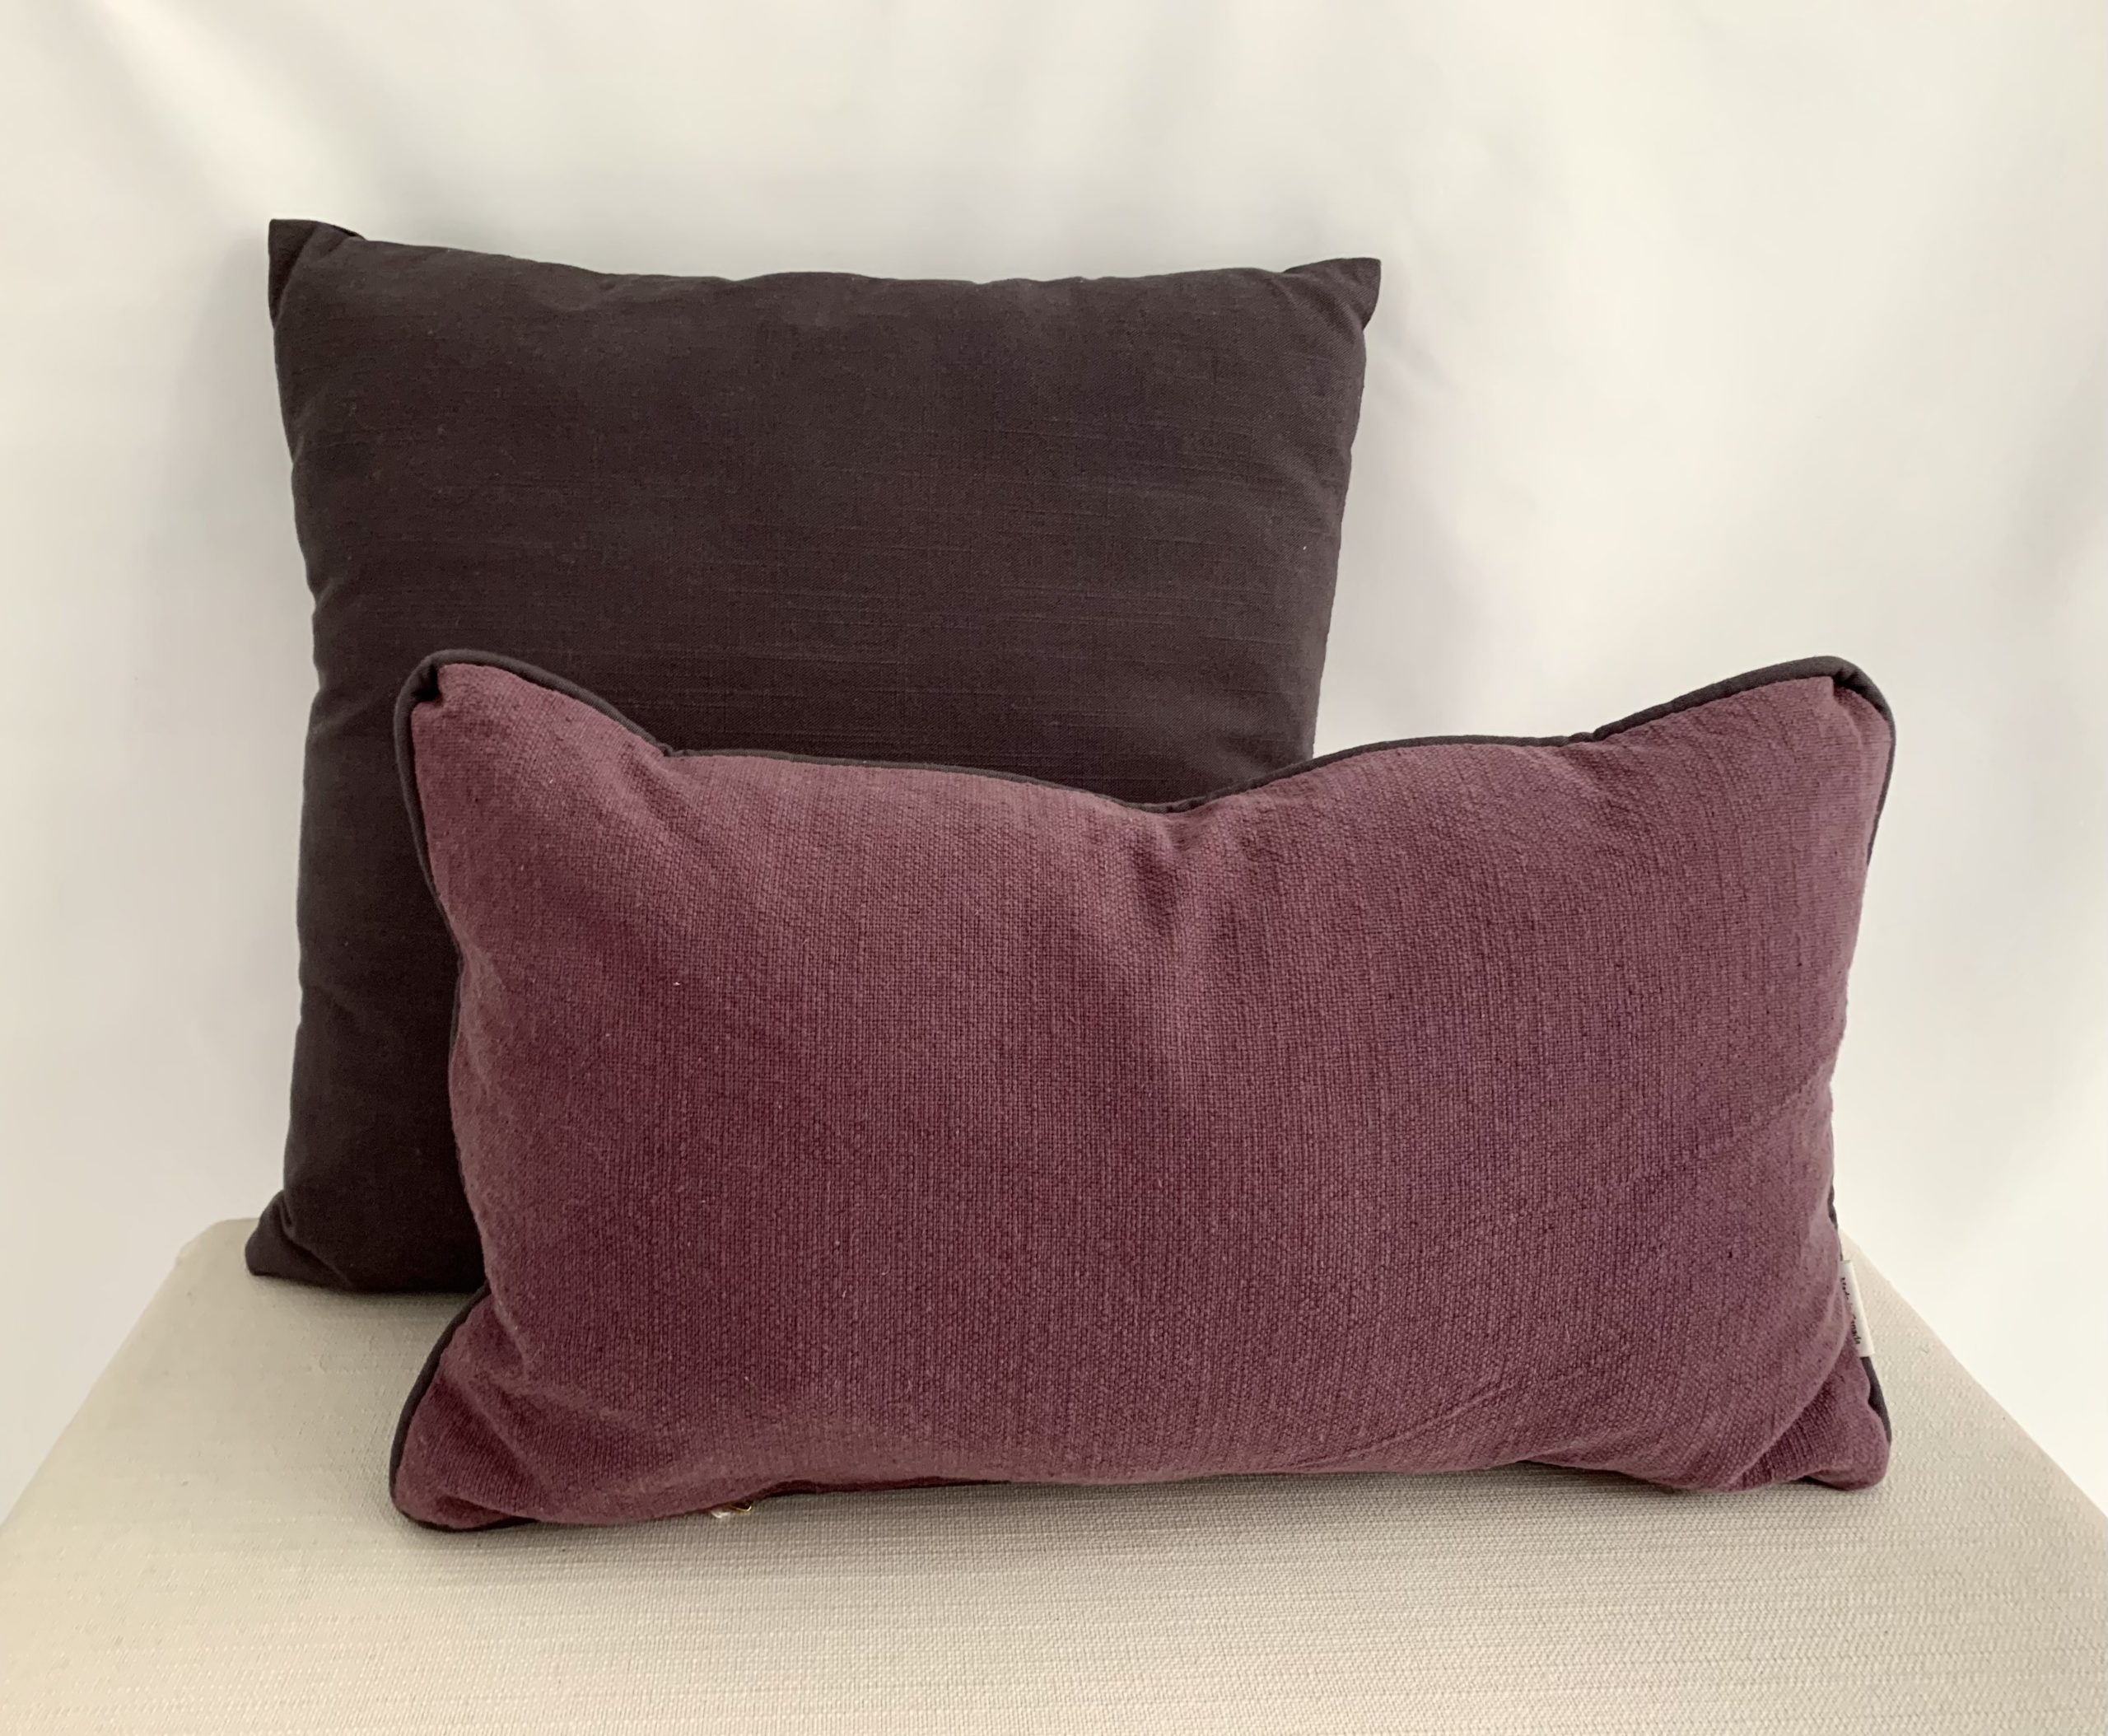 Throw Pillows Decor Cushions Decorative Pillows SALE!!!Handmade Linen Pillow Cover -Decorative Pillow Decor Linen Pillows